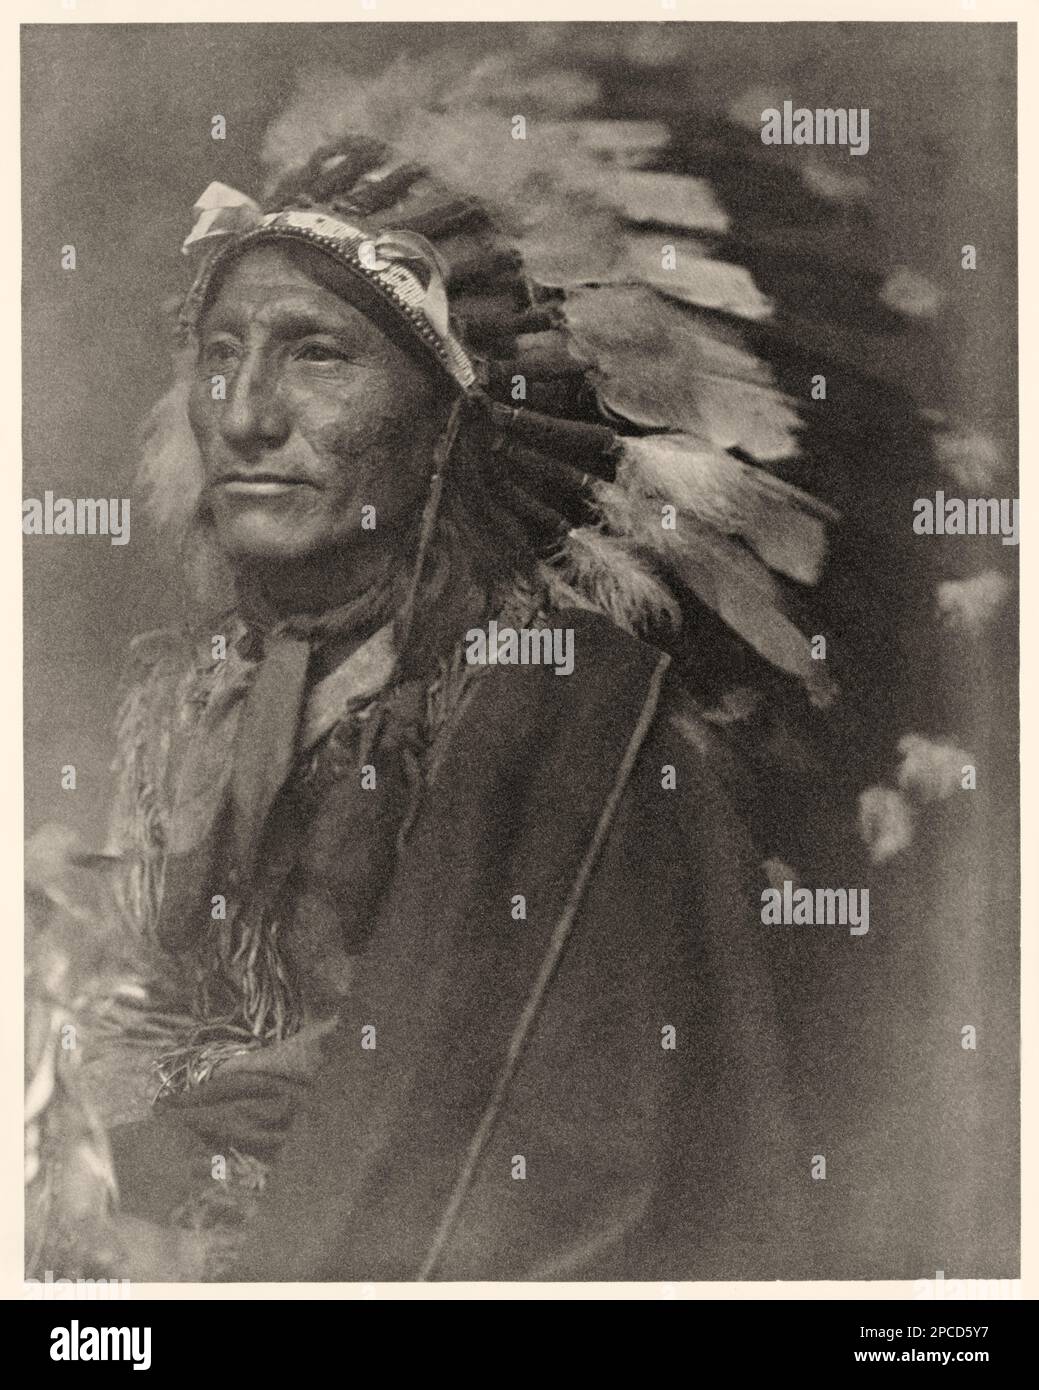 1902 ca , USA : Indian chief.  Portrait of Native American man in headdress and robe. Photo by woman photographer Gertrude Kasebier ( 1852 - 1934 ) , photomechanical print edited by Camera Club , New York, USA  - foto storiche - foto storica  -  Indians - INDIANI D' AMERICA - natives americans  - Indians of North America -  CAPO INDIANO - portrait - ritratto - pellerossa - piuma - copricapo di piume - feathers - foto pittorialista - pictorialist photograph - CAMERA WORK -    ----  Archivio GBB Stock Photo